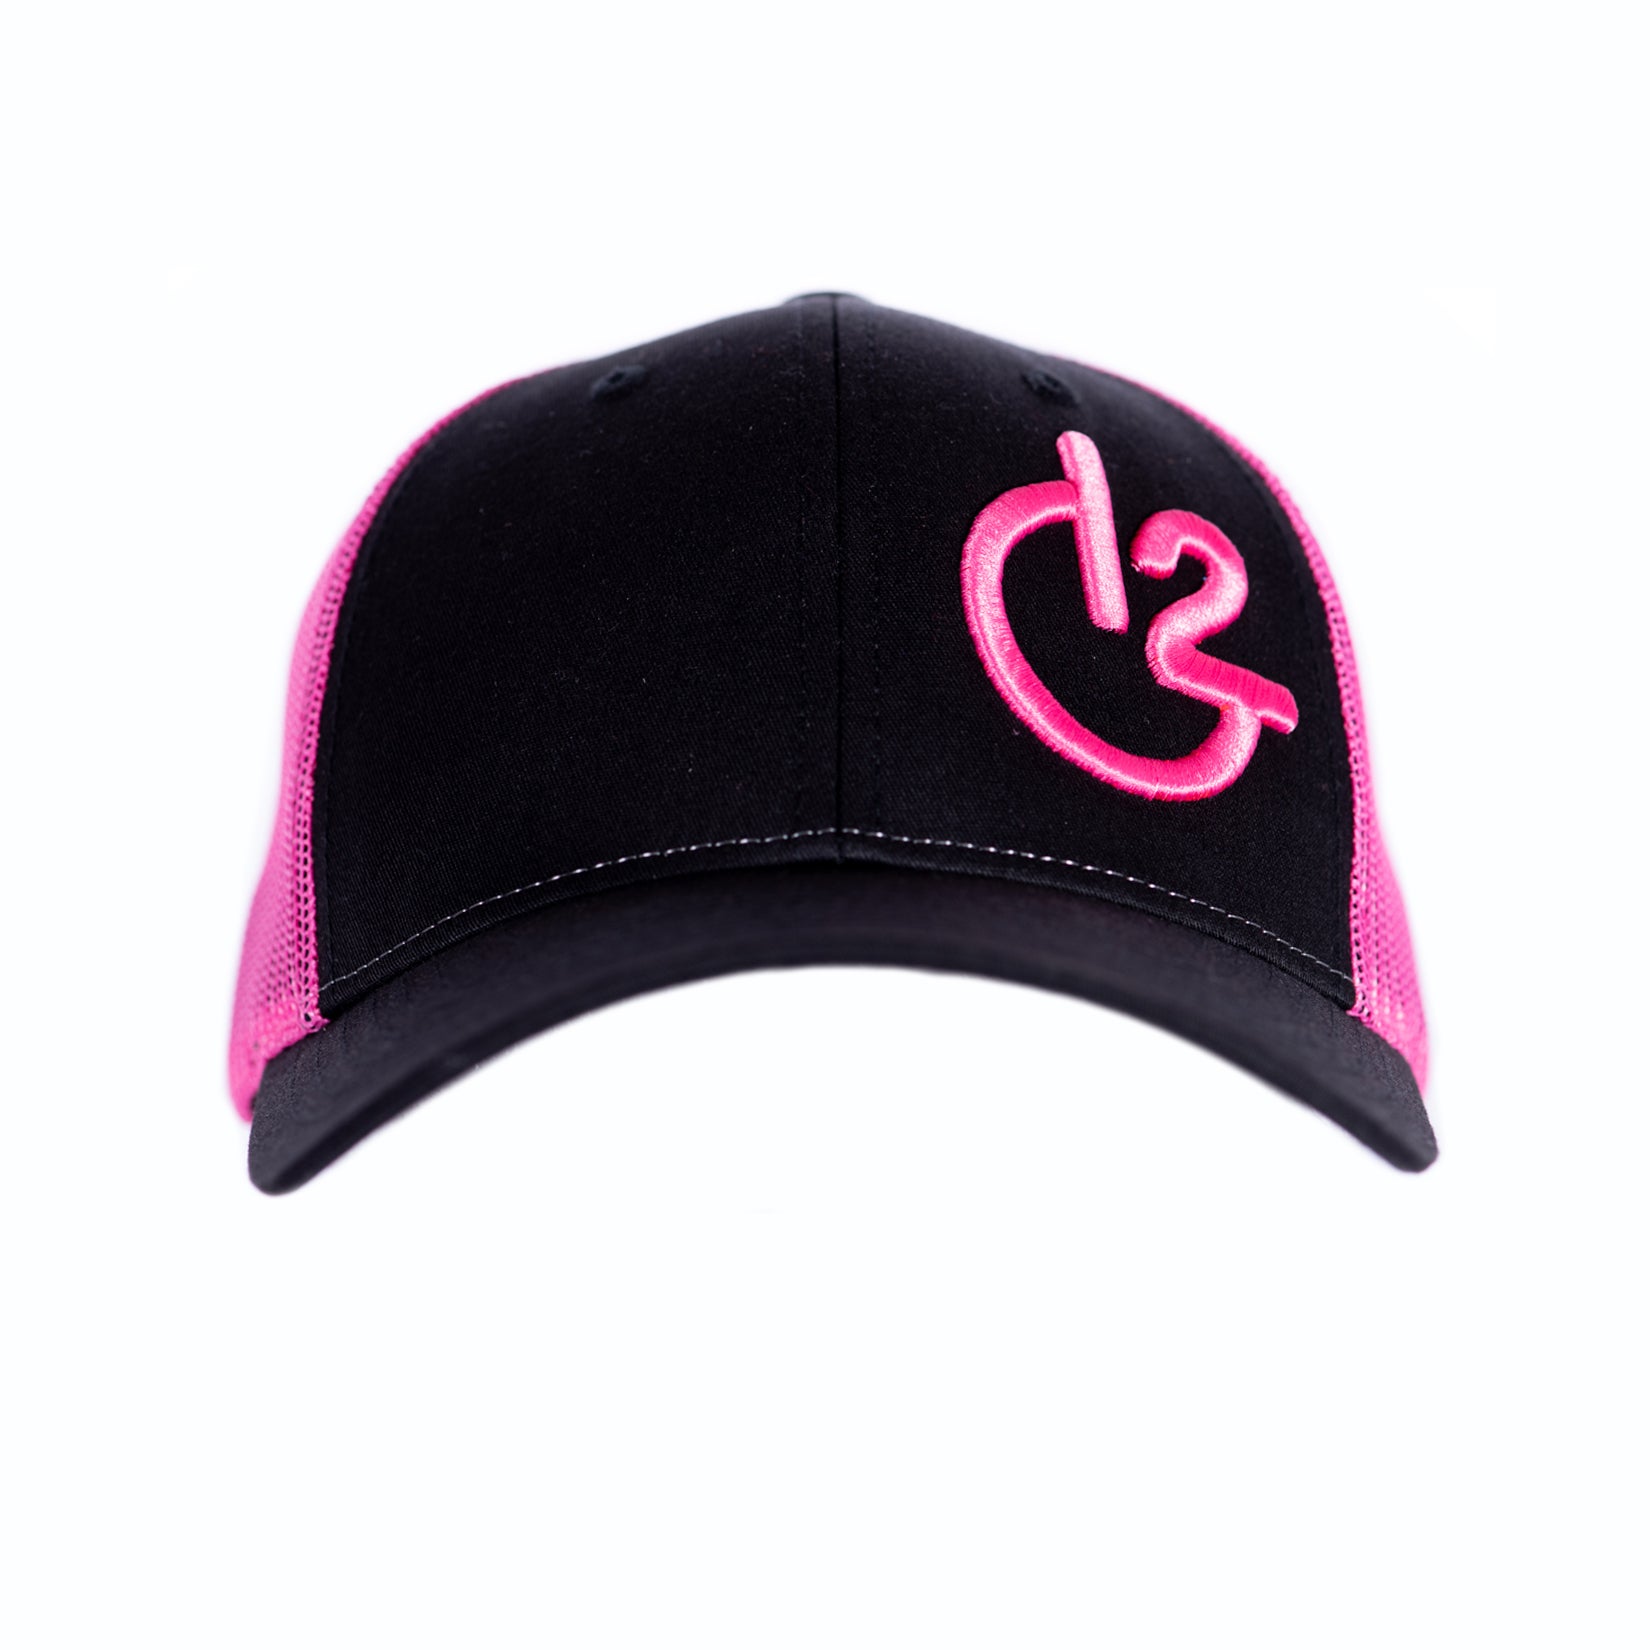 Black and Neon Pink 12 Gauge Low Profile Baseball Hat, Hats, 12 Gauge Ranch, 12 Gauge Ranch Ranch  12 Gauge Ranch